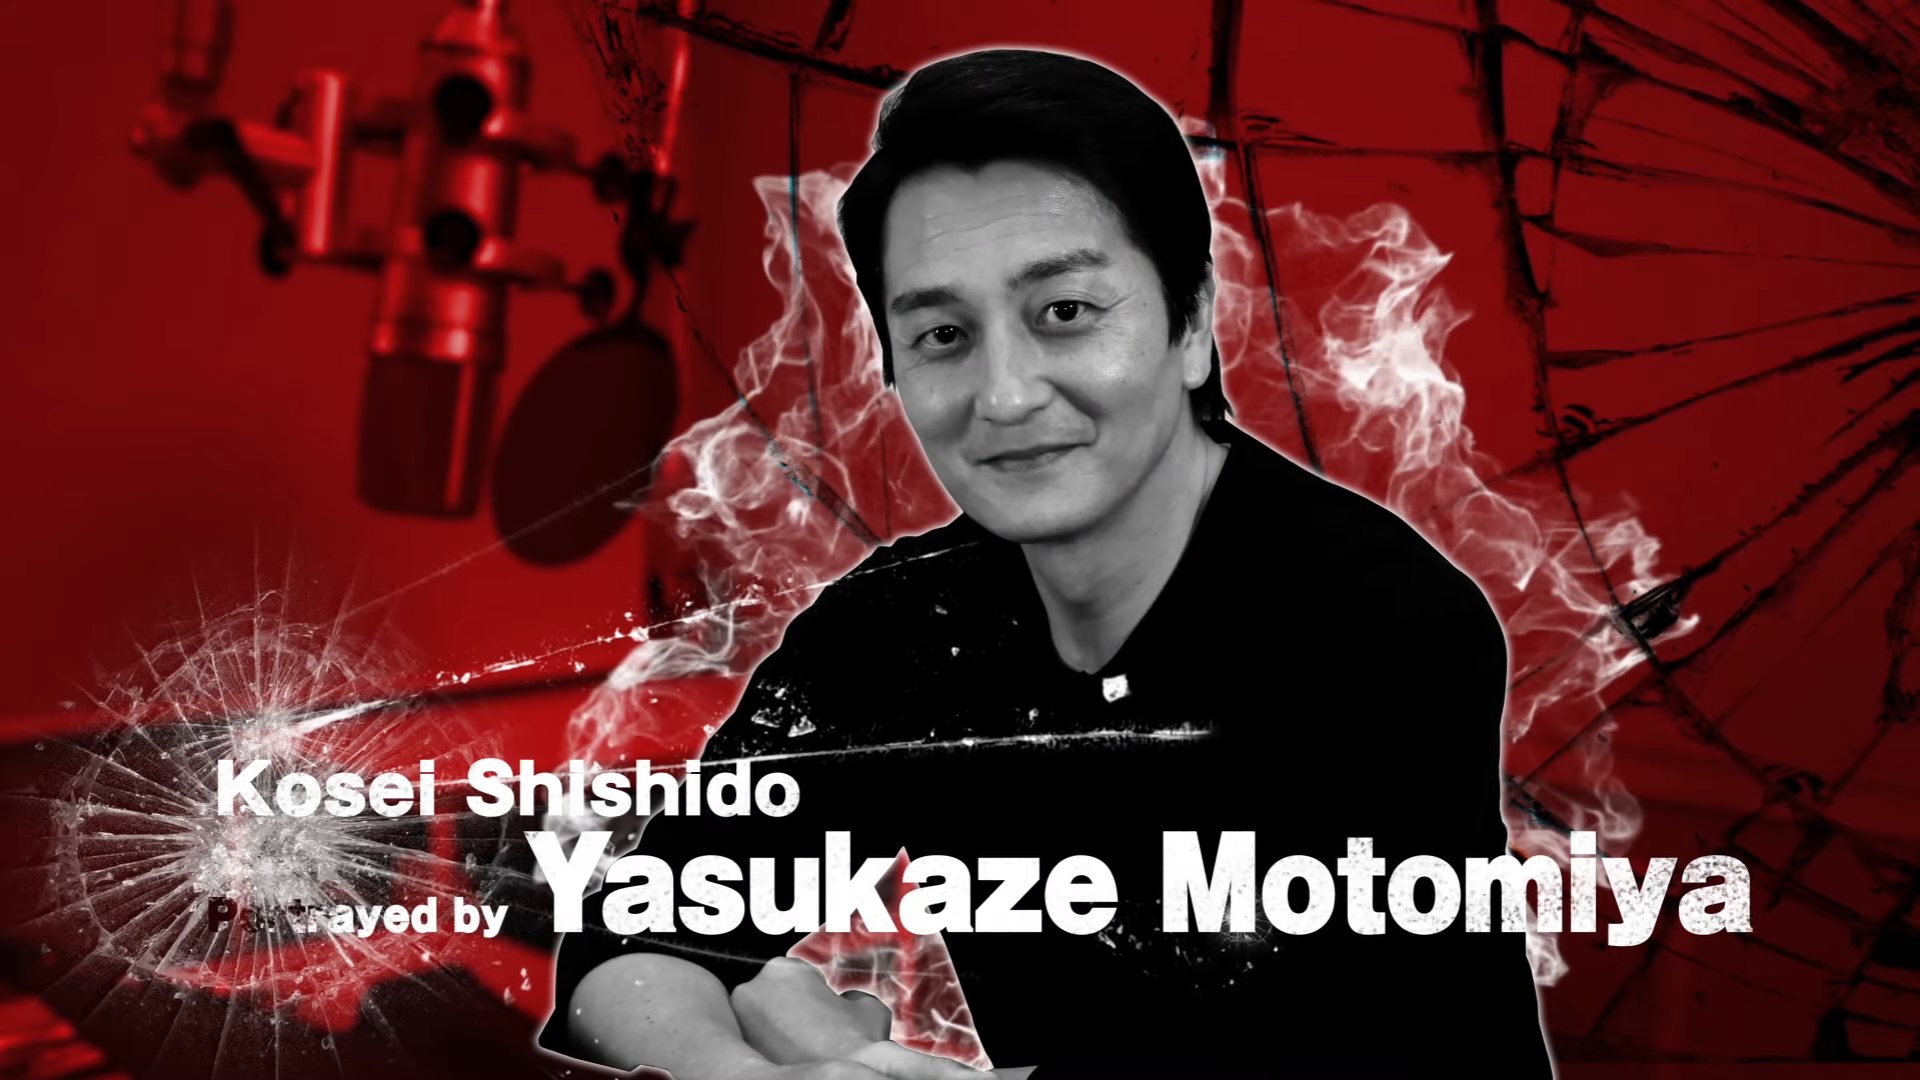 Like a Dragon Gaiden: The Man Who Erased His Name Shares English Video Interview with Actor of Shishido, Yasukaze Motomiya